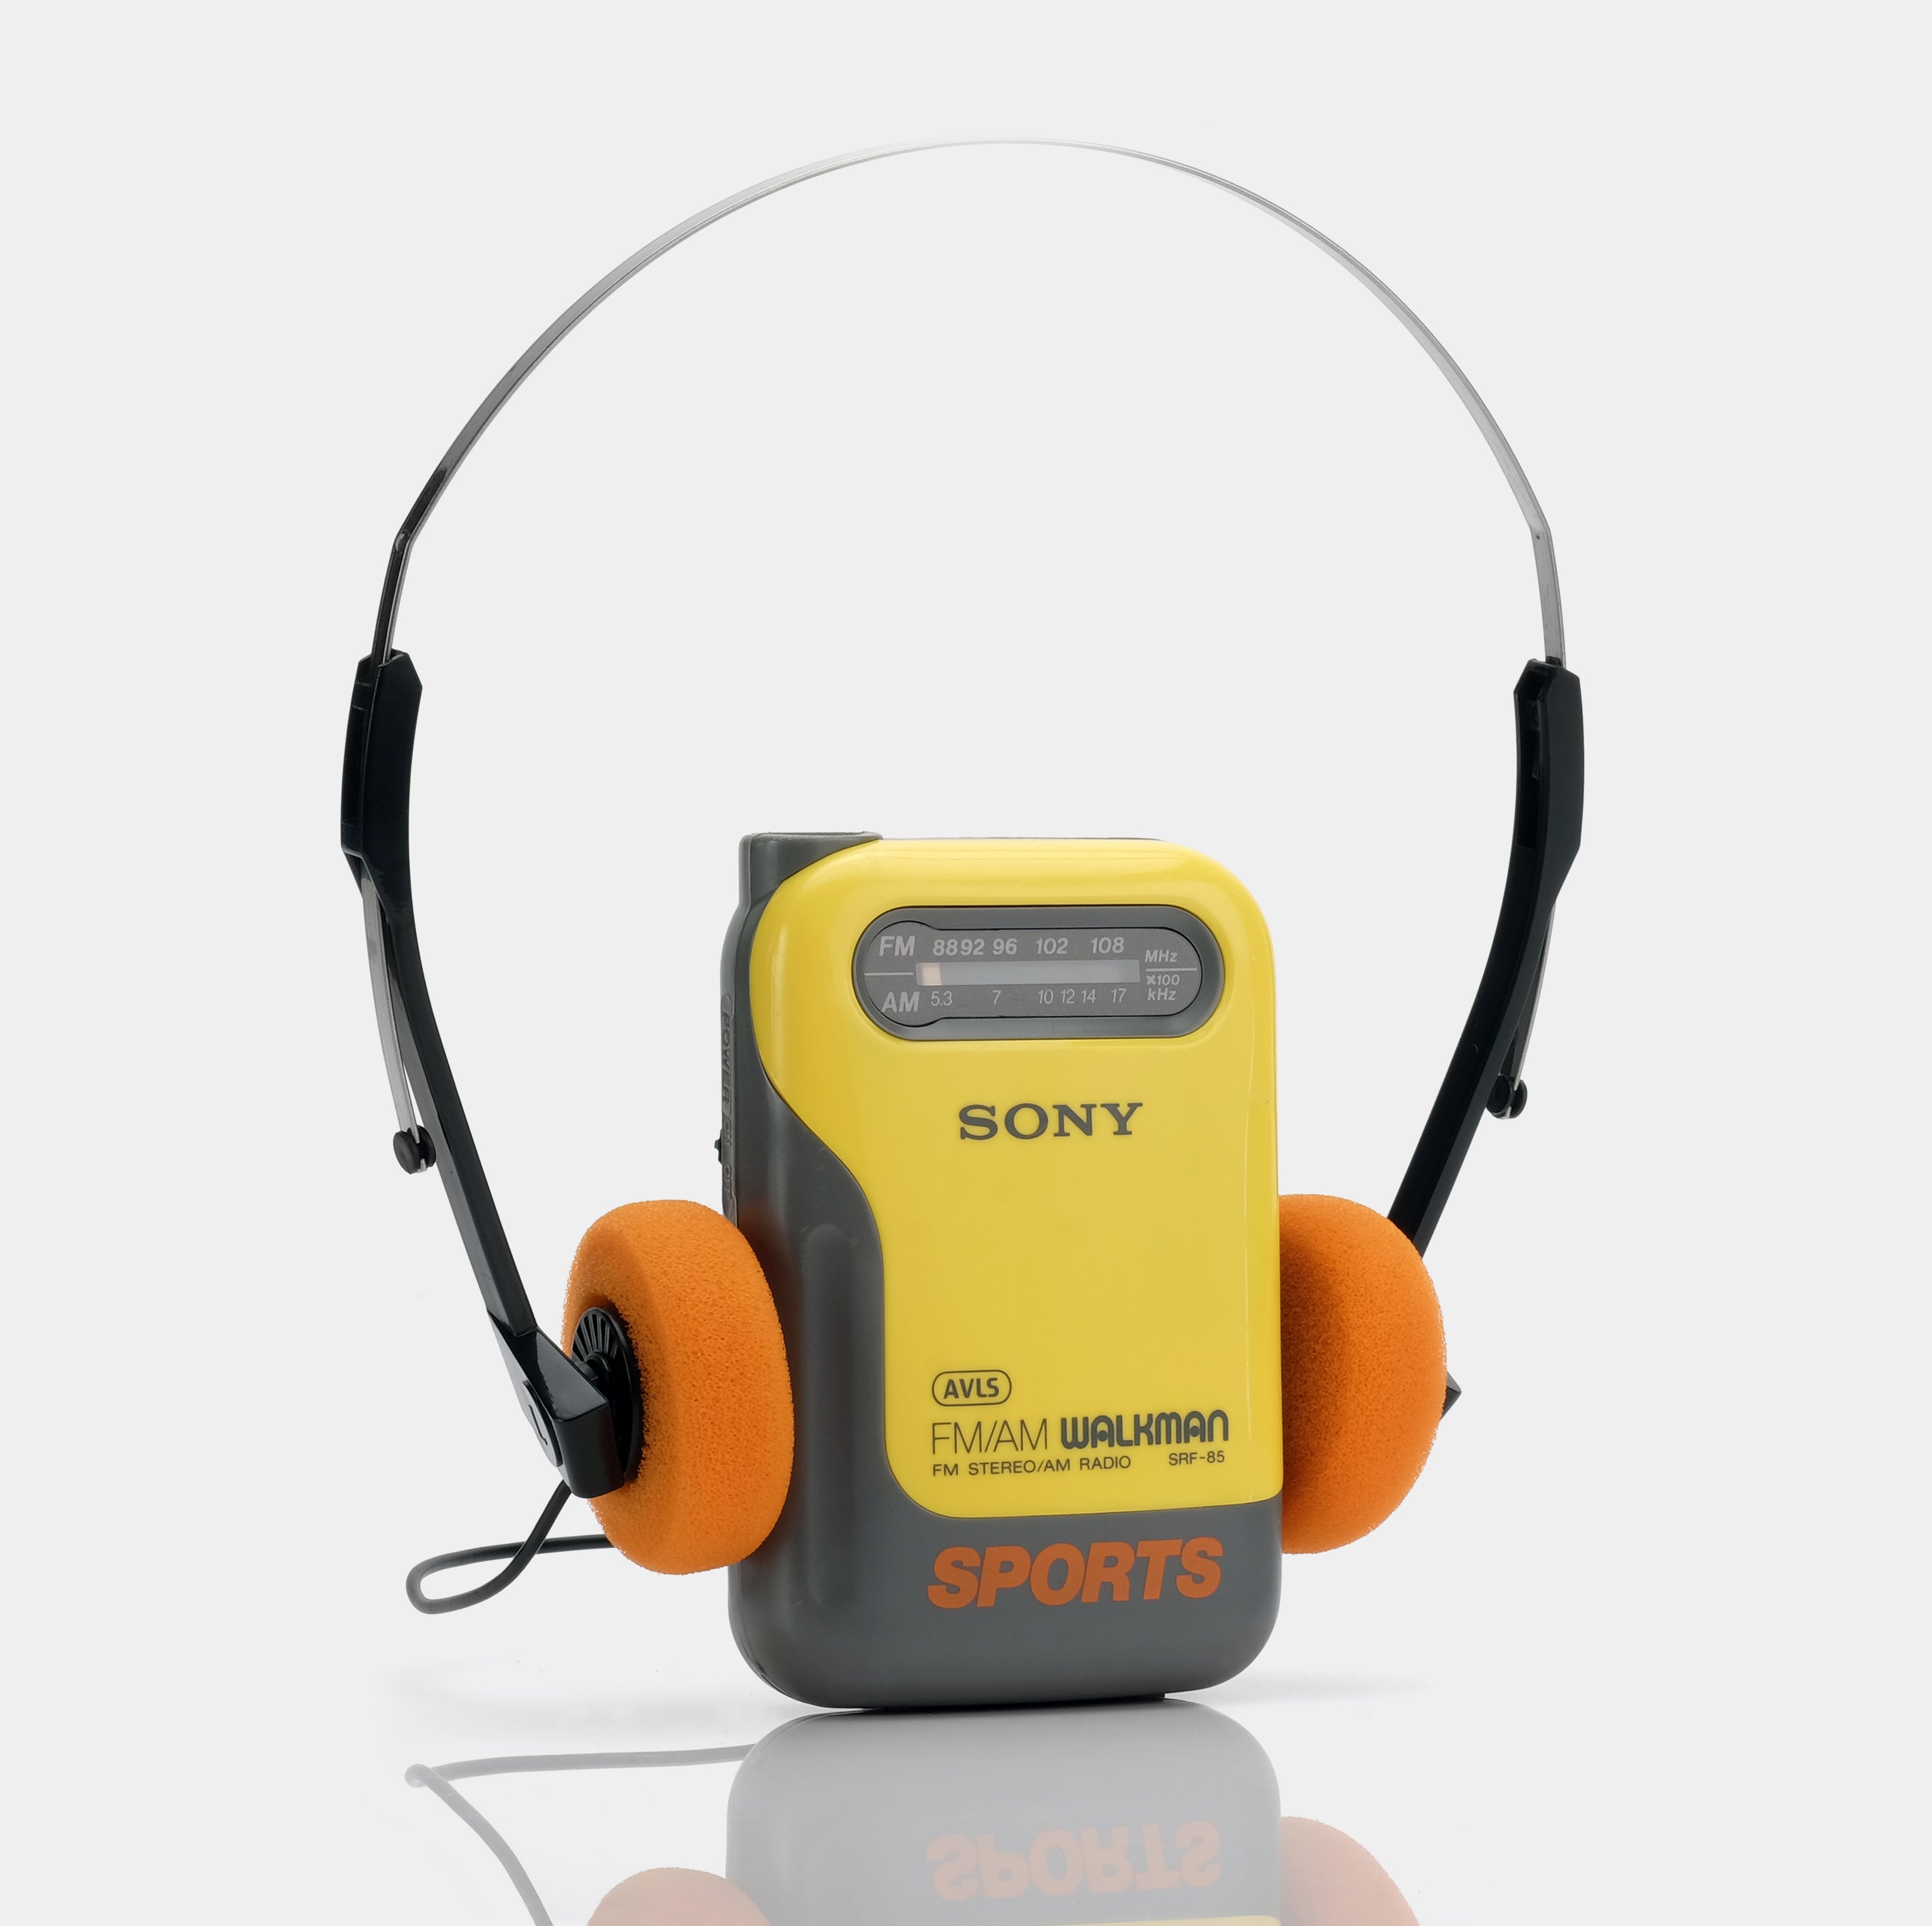 Sony Walkman Sports SRF-85 AM/FM Portable Radio